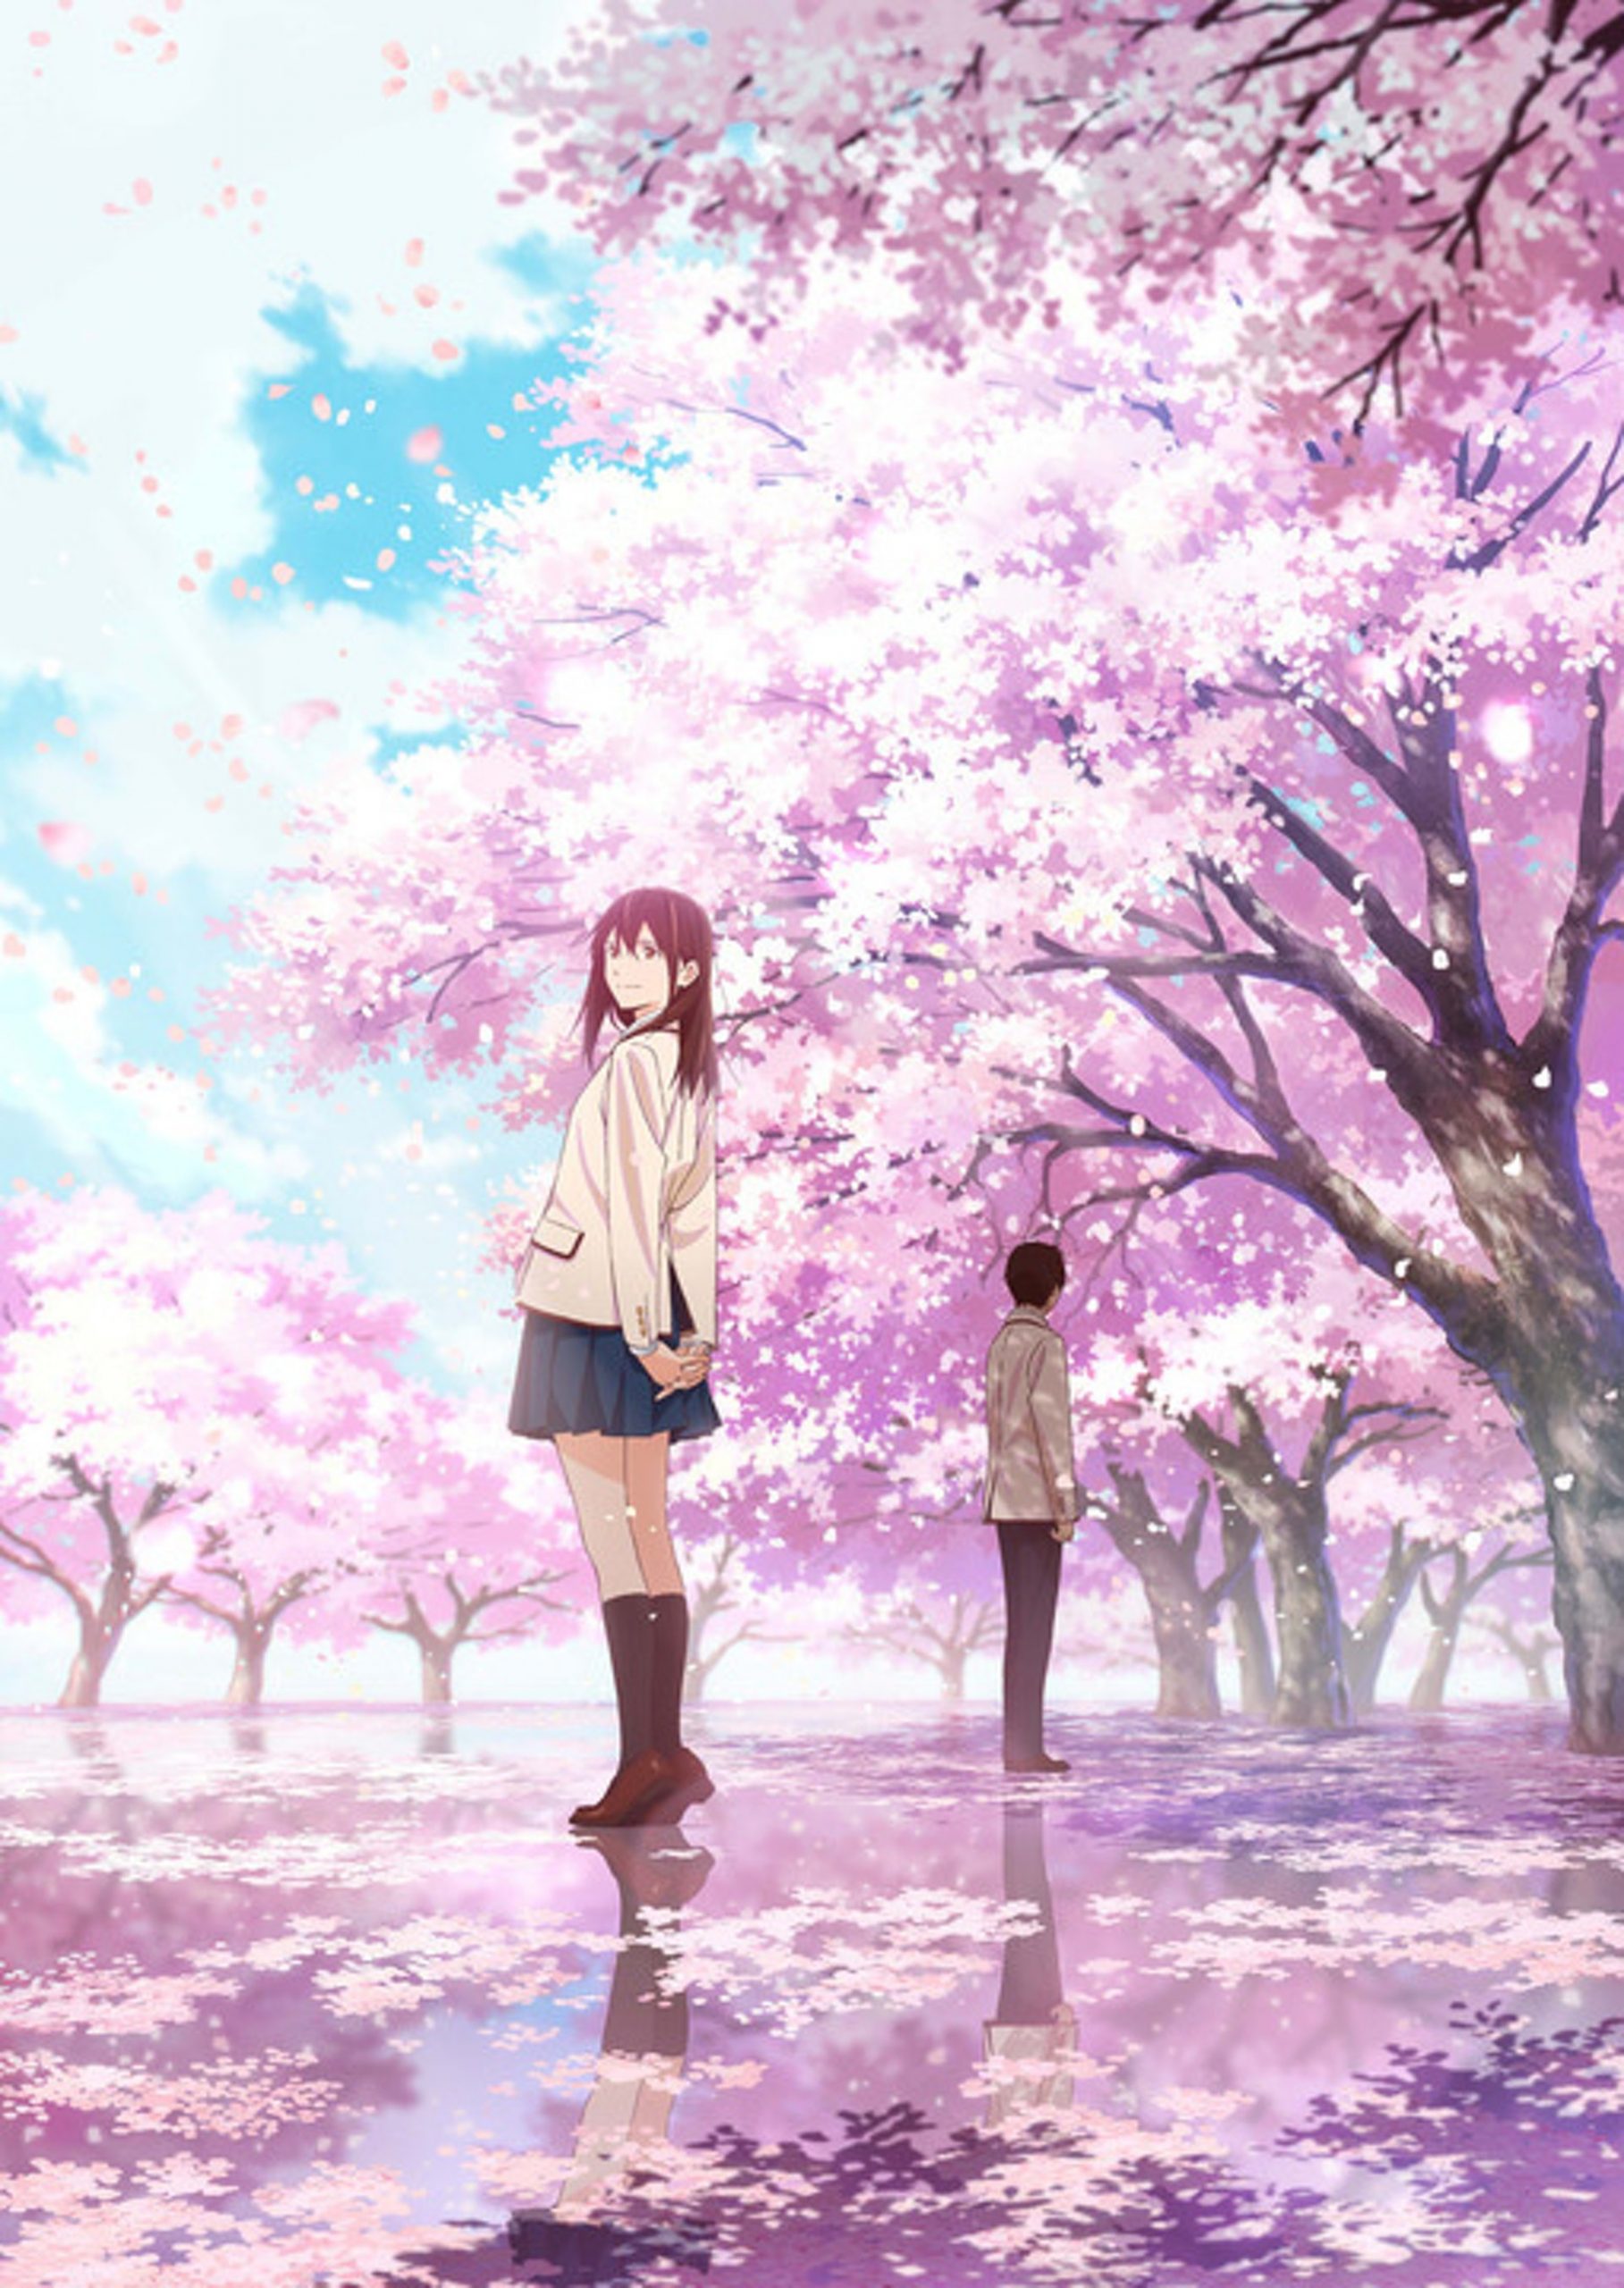 10 Best Dubbed Romance Anime Series  TechNadu